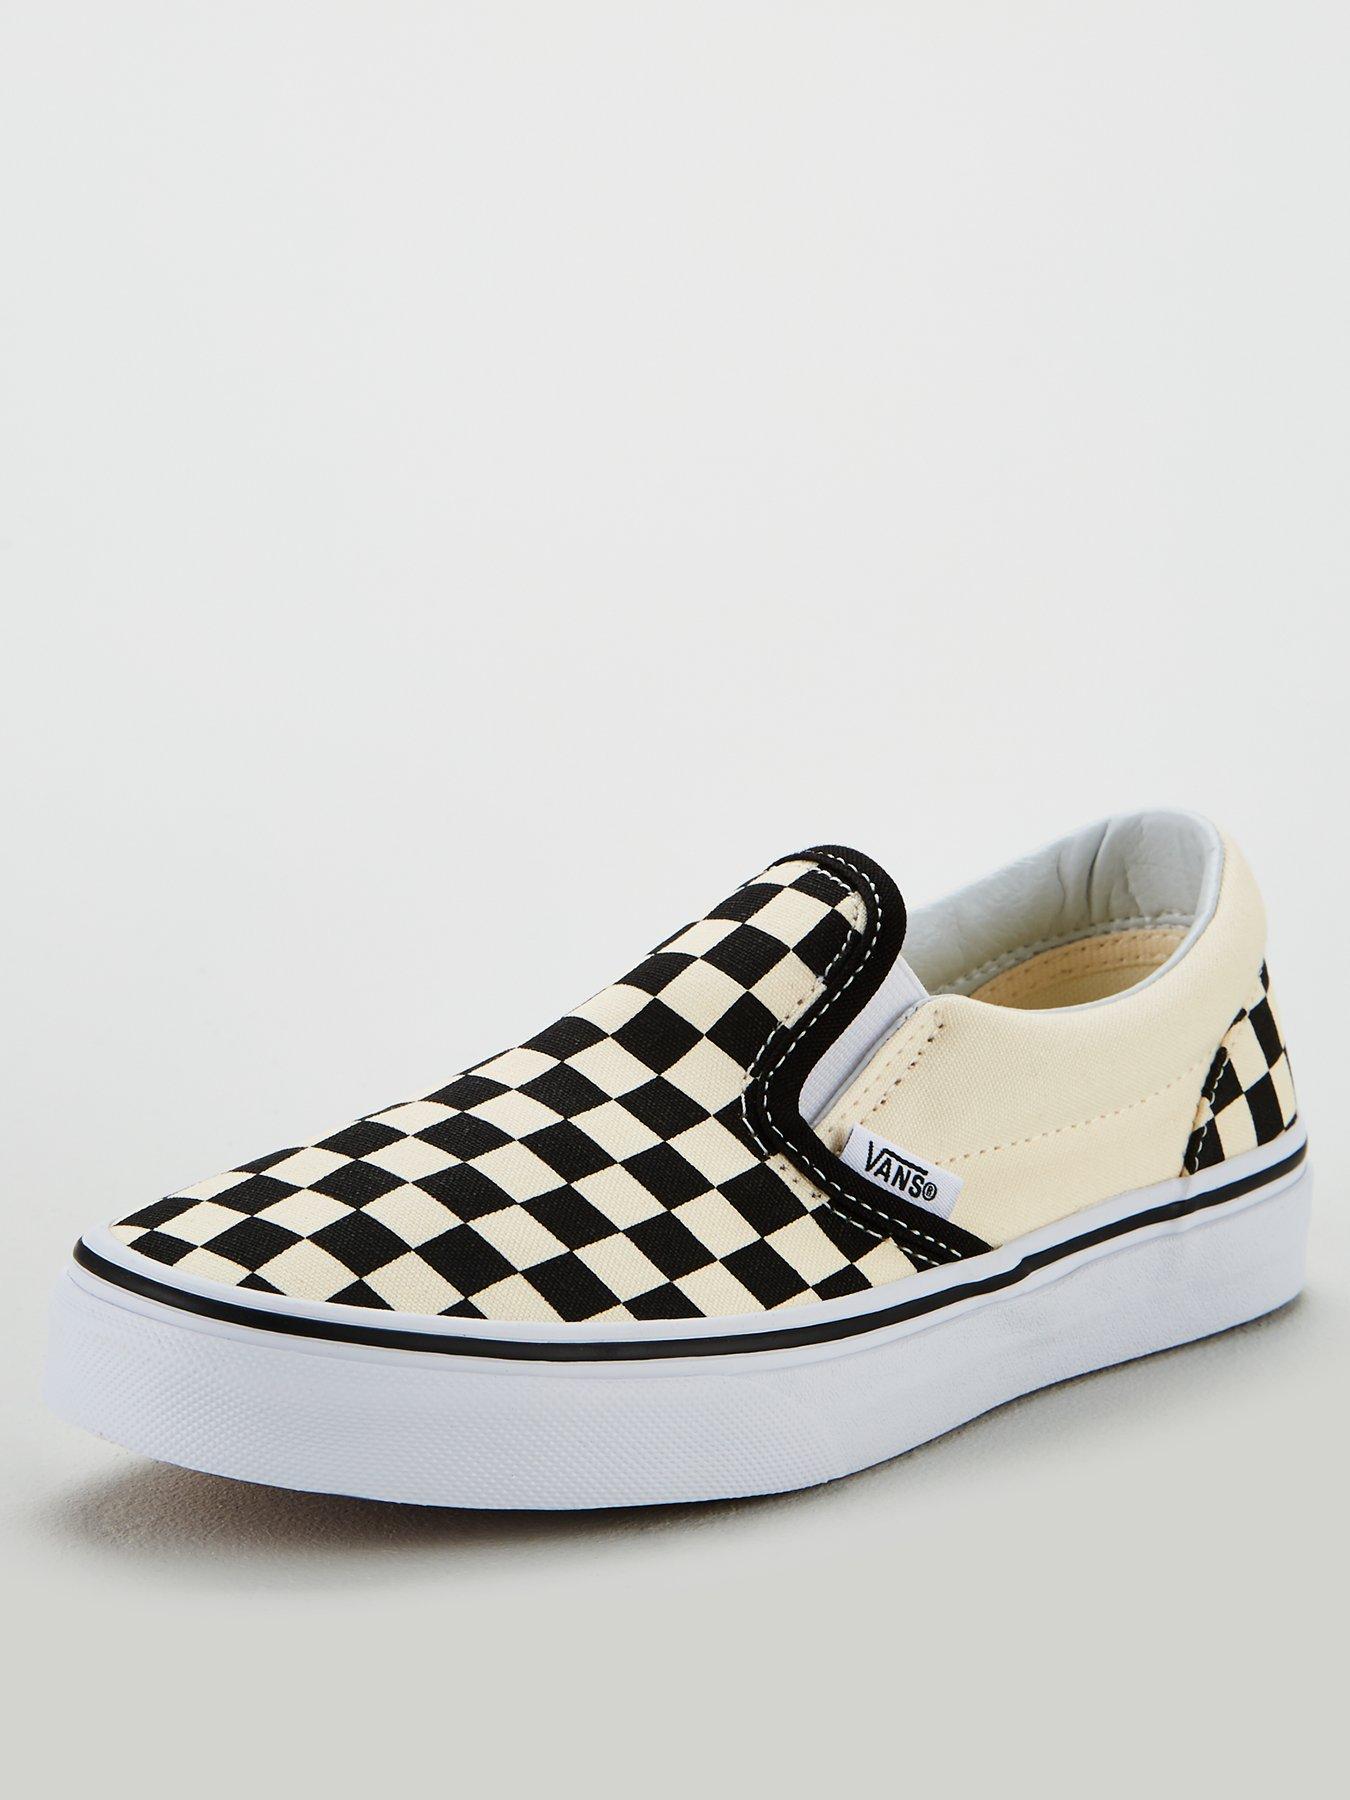 Vans Checkerboard Classic Slip-on Plimsolls - Black/White | very.co.uk